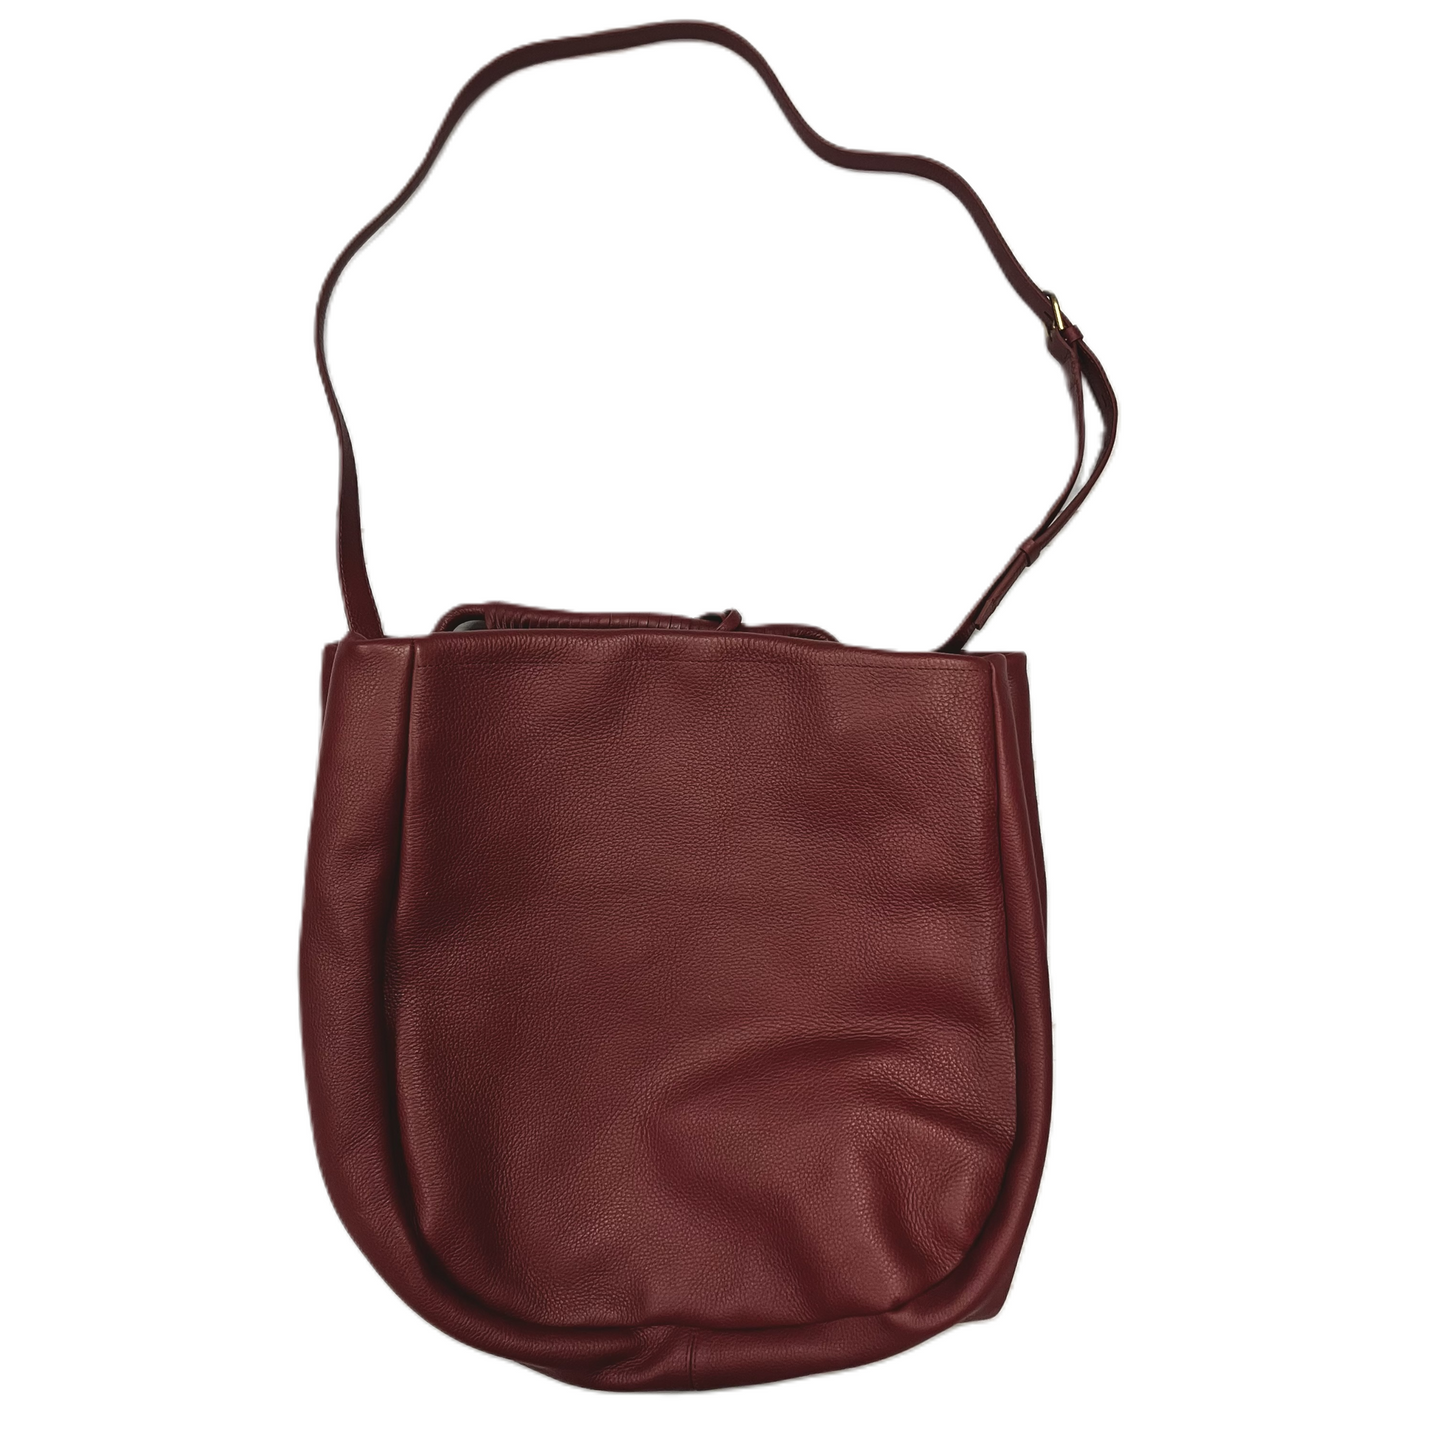 Handbag Leather By Etienne Aigner  Size: Large